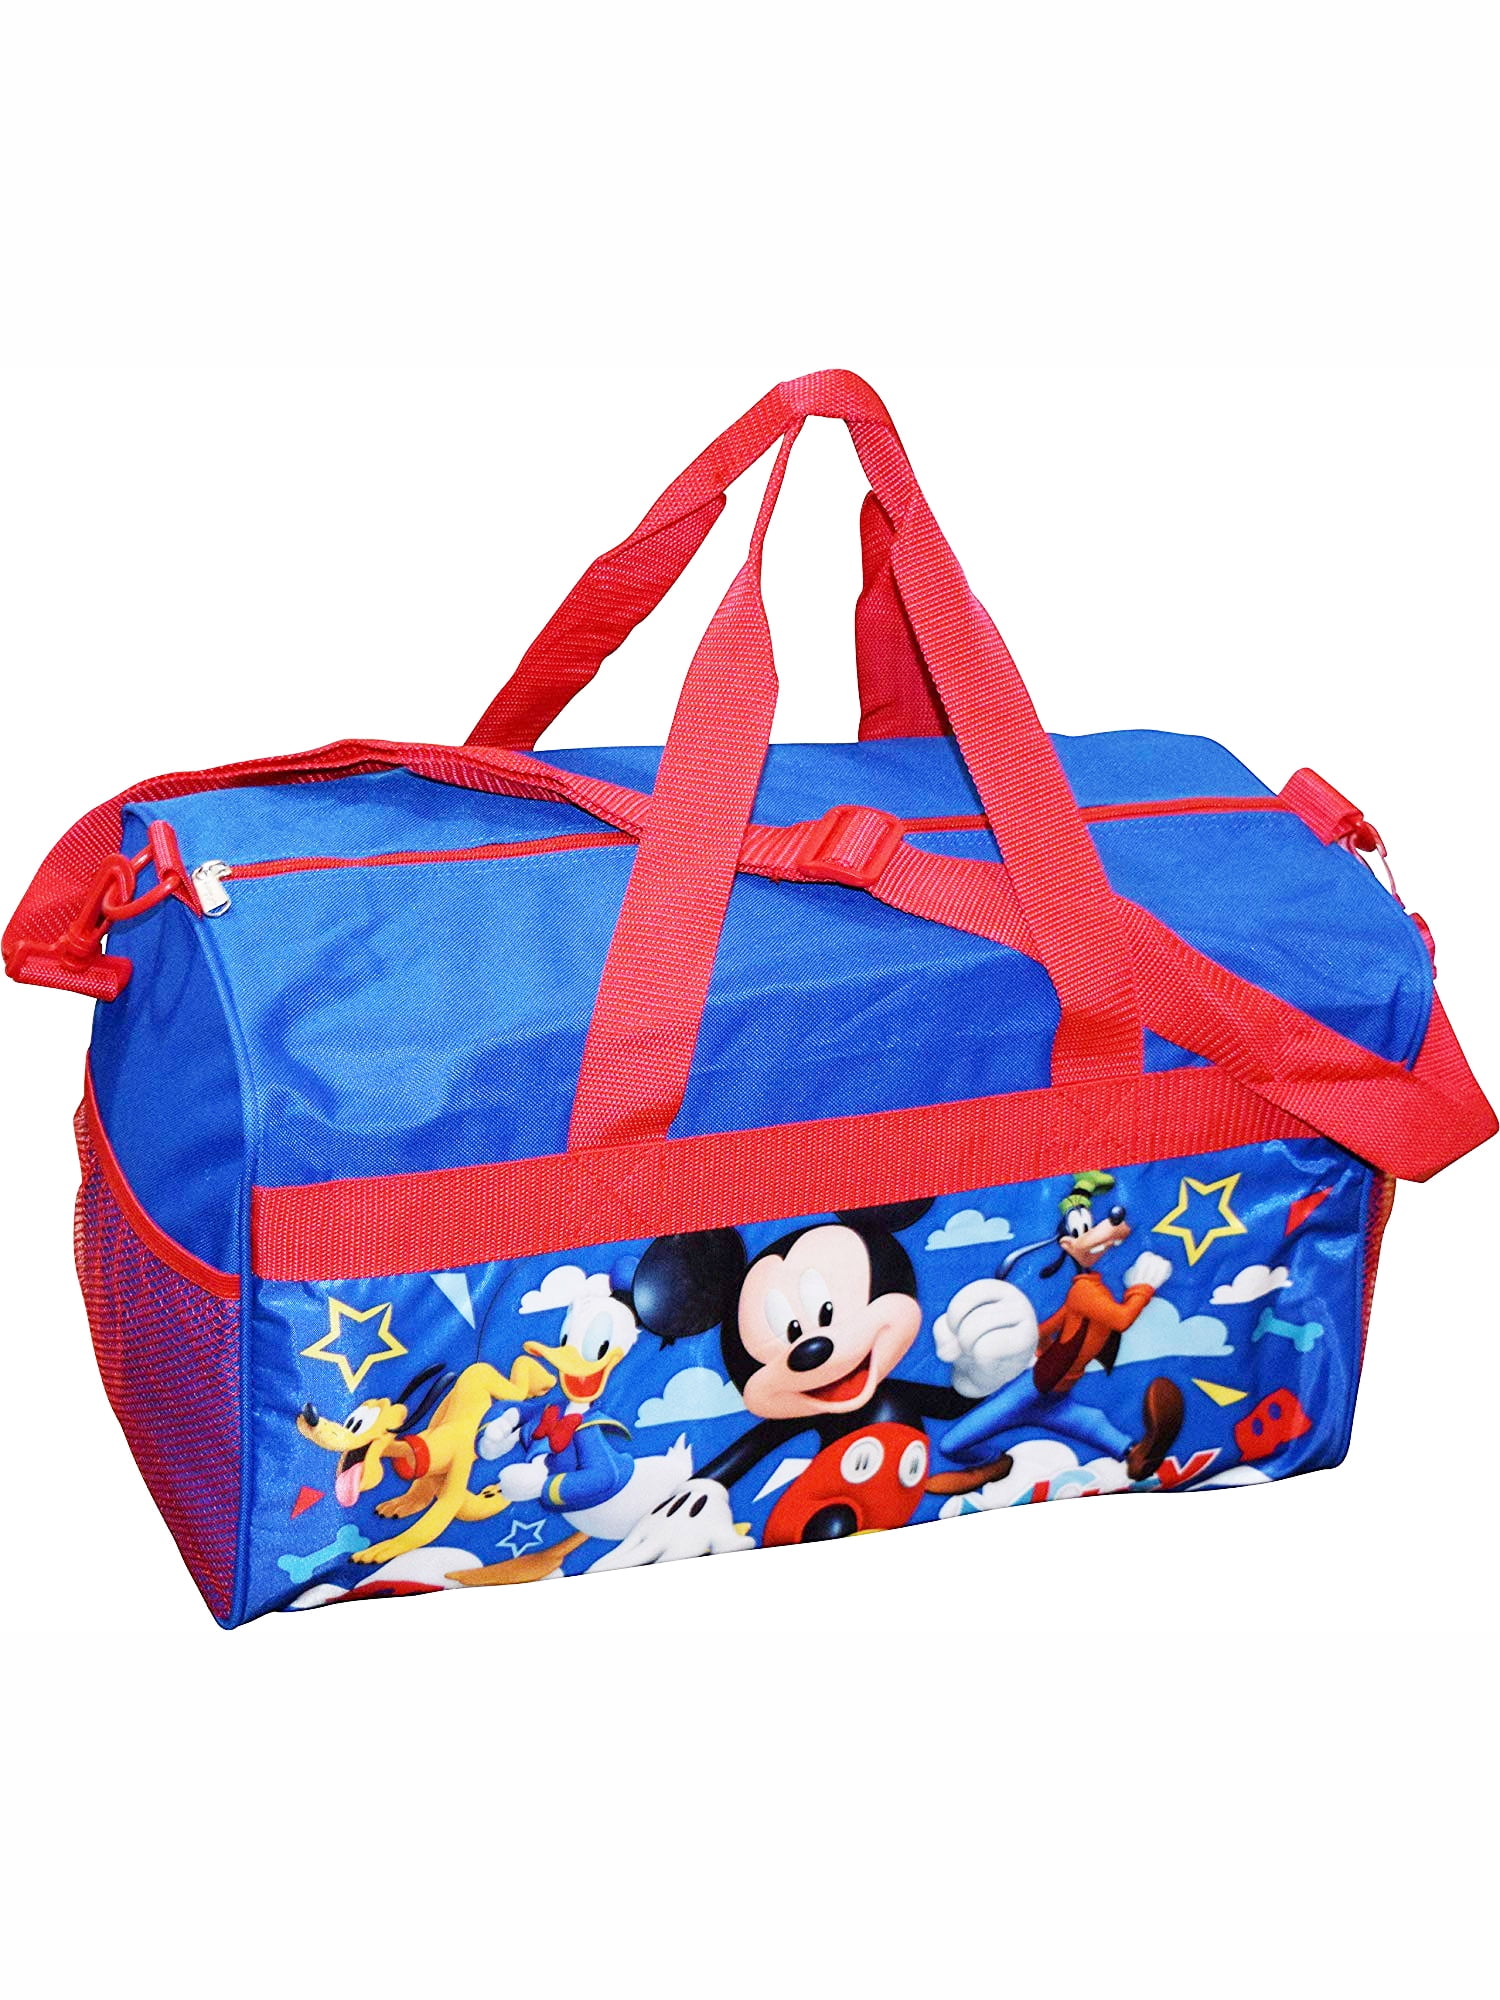 Disney Kids Gym Bag Sports Bag Shoe Bag Tote Fabric Backpack 